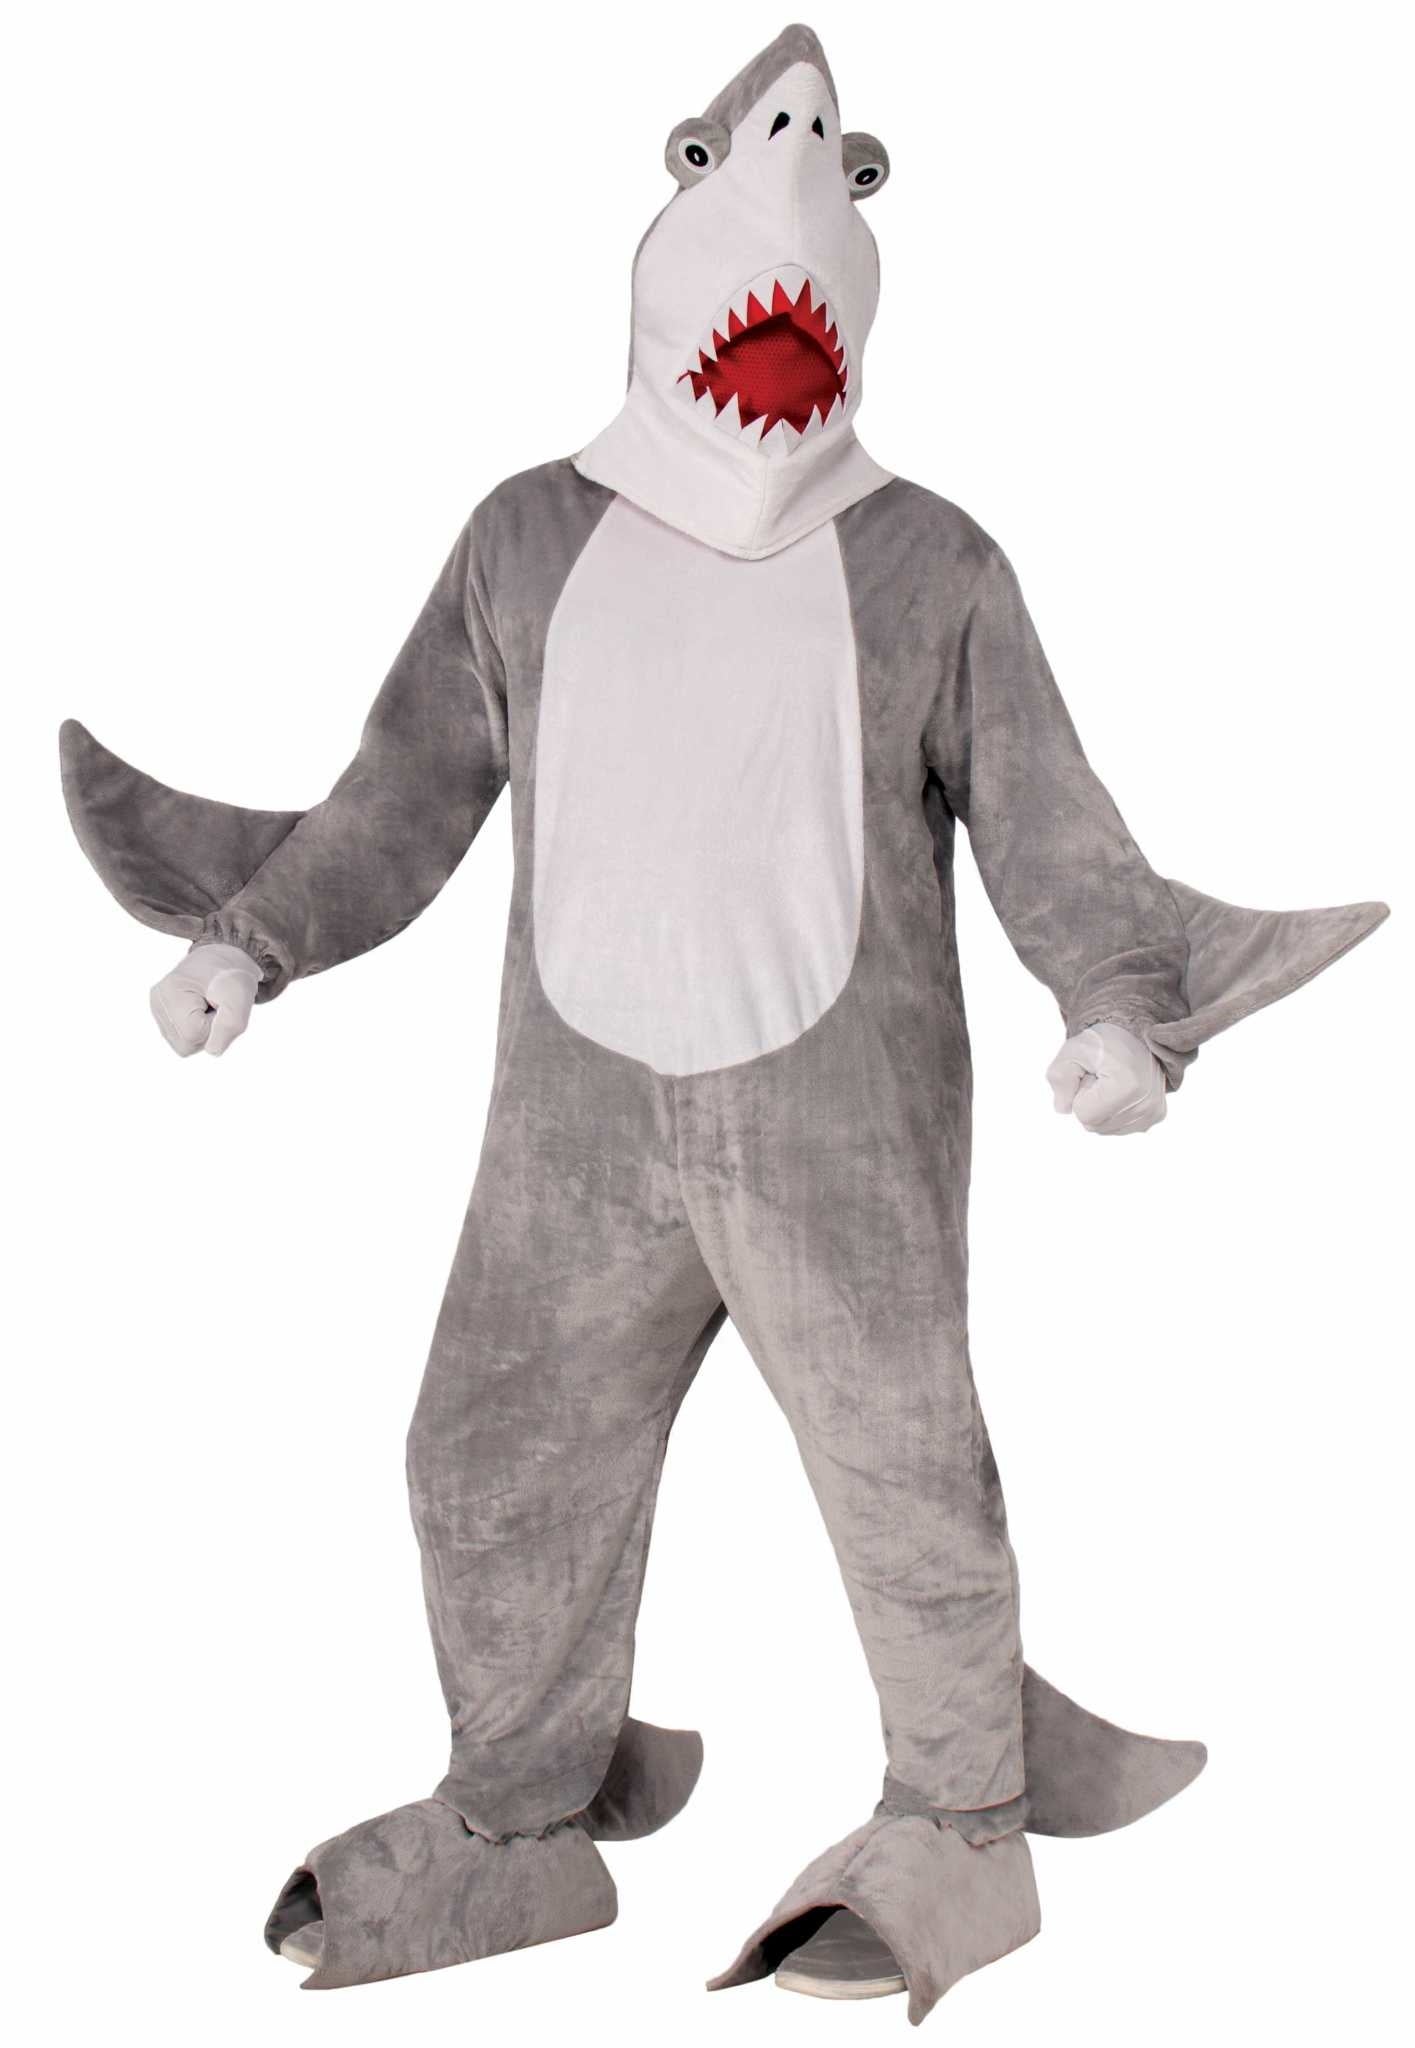 Adult Plush Mascot: Chomper the Shark - Standard